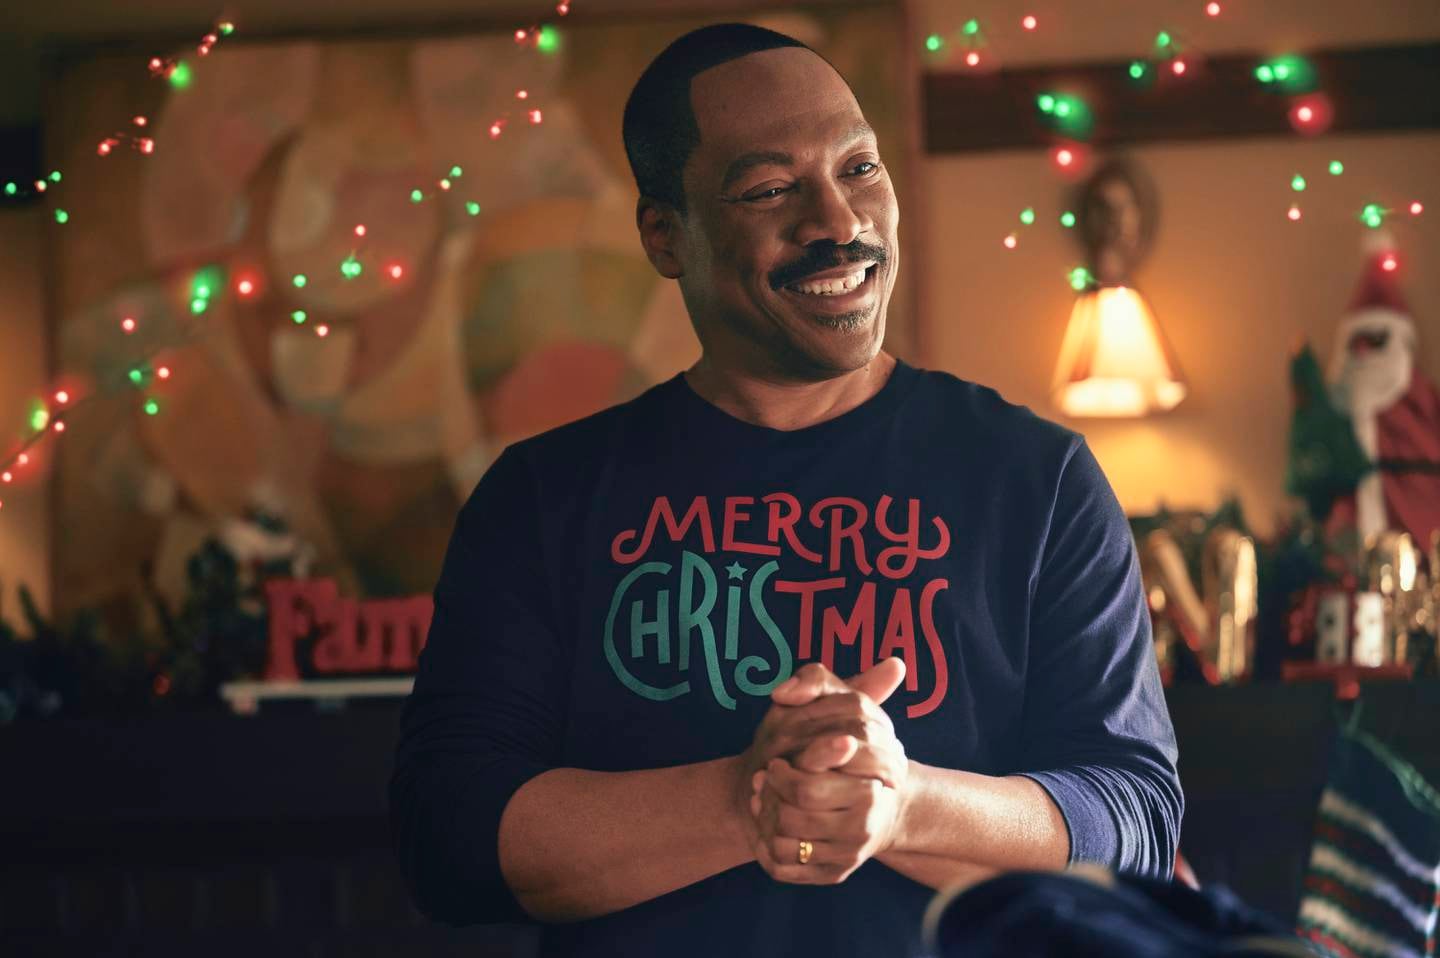 Eddie Murphy spiller Chris i «Candy Cane Lane», den nye julefilmen fra Amazon Prime Video, der han og familien har havnet i et jule-inferno de har skylda for selv.